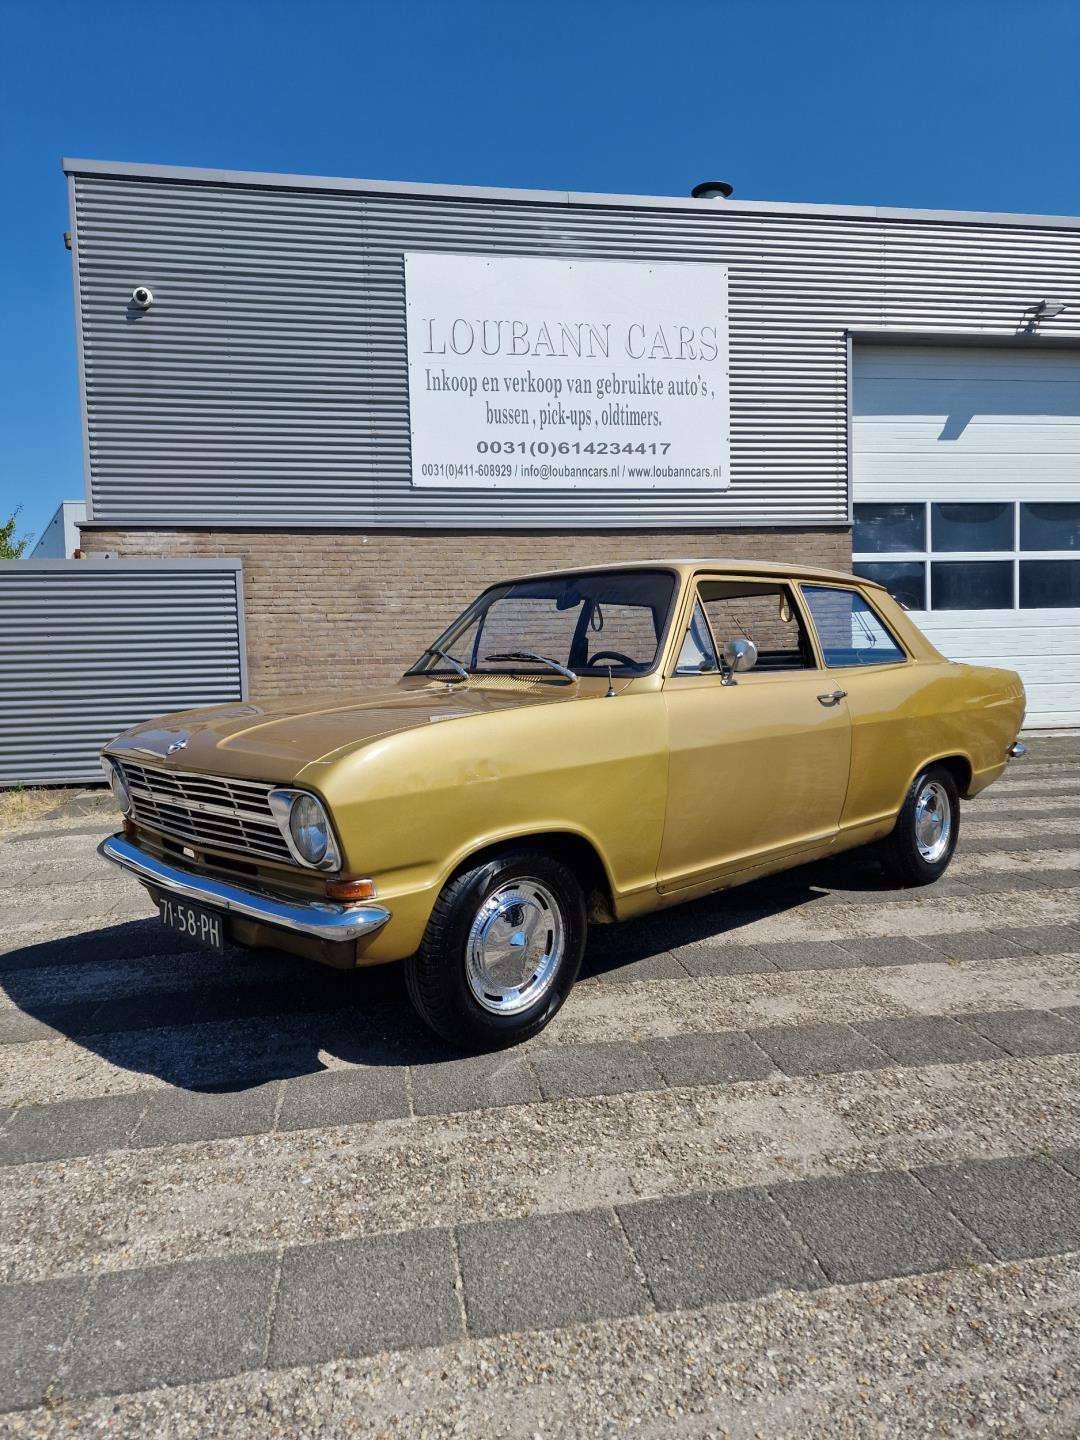 afgewerkt Dalset versnelling For Sale: Opel Kadett 1,2 S (1970) offered for £1,958